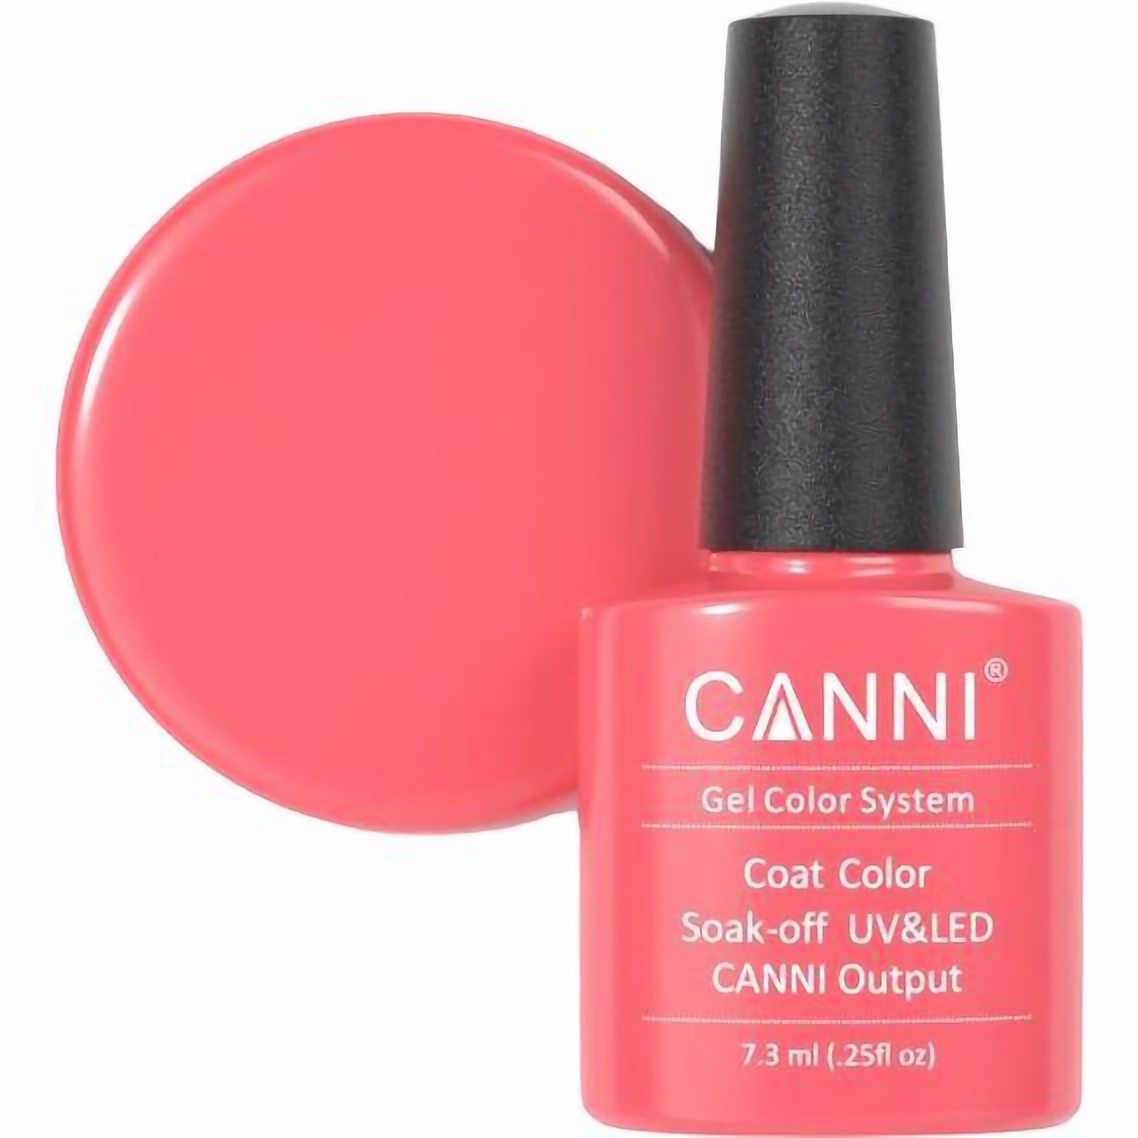 Гель-лак Canni Color Coat Soak-off UV&LED 111 яркий оранжево-розовый 7.3 мл - фото 1